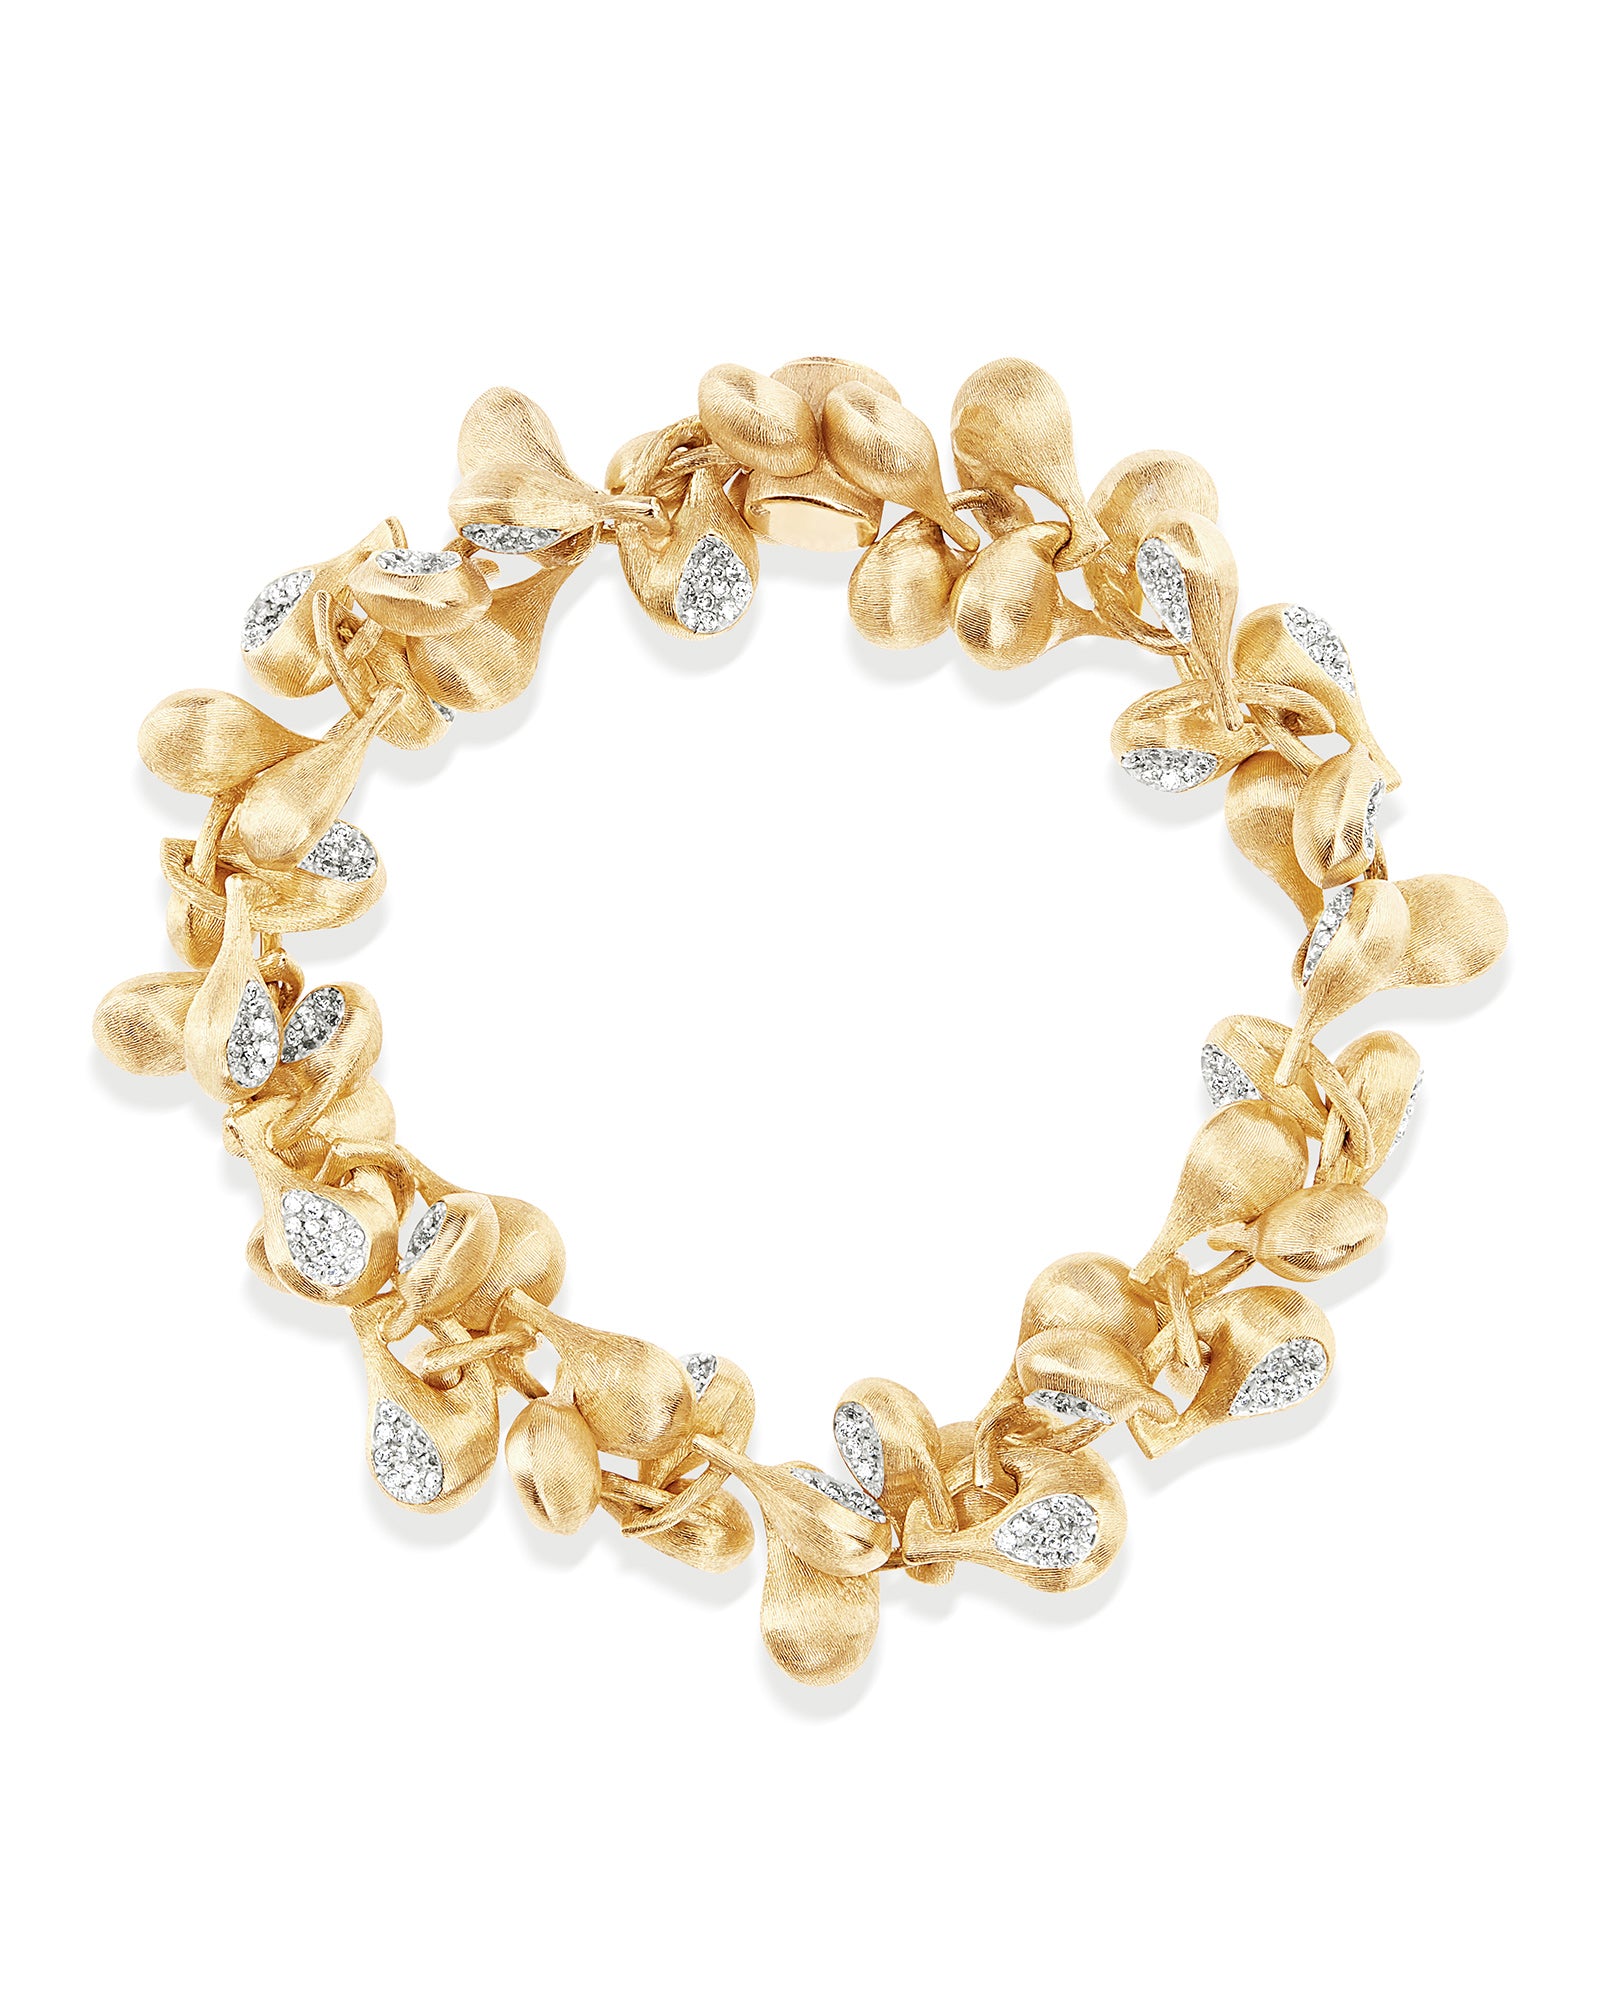 "Trasformista" Gold and Diamonds statement bracelet